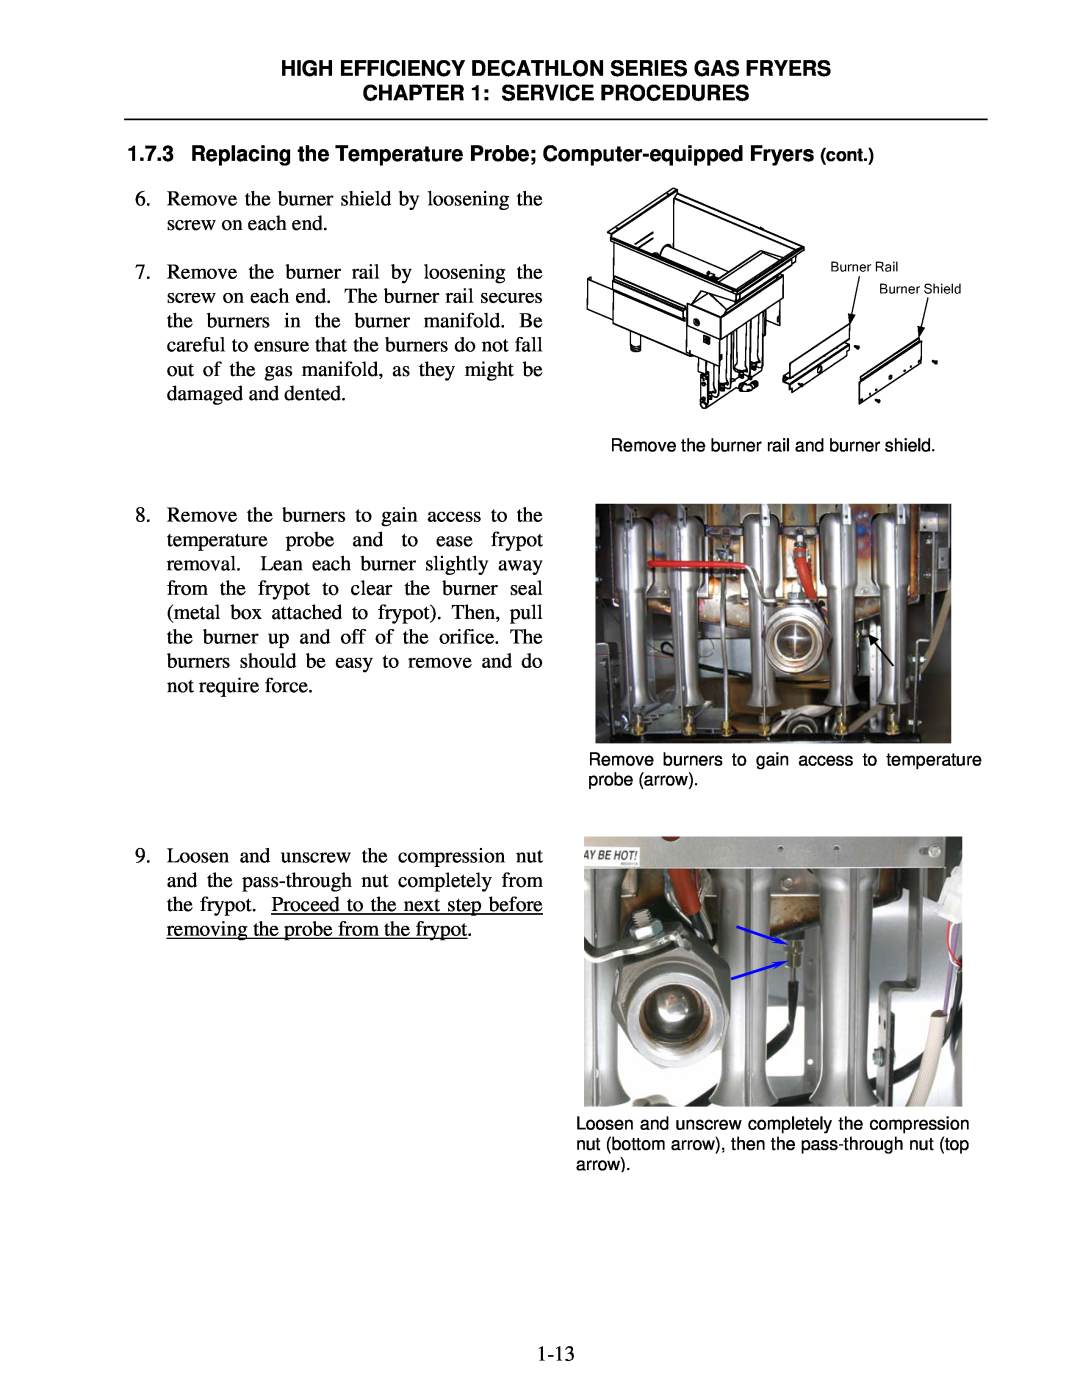 Frymaster FPHD manual High Efficiency Decathlon Series Gas Fryers, Service Procedures 